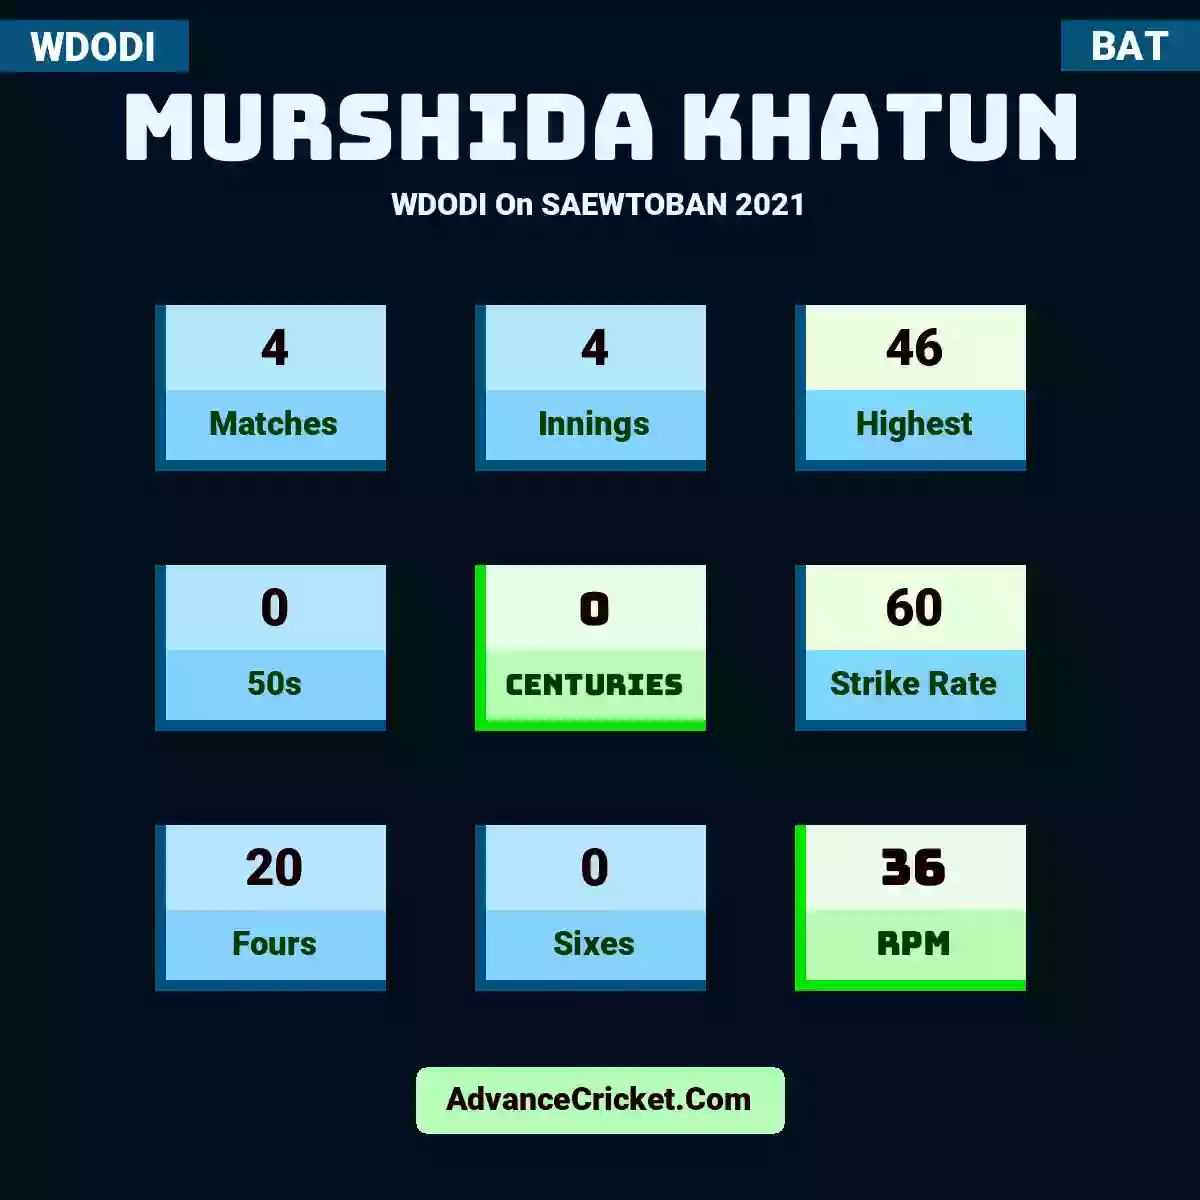 Murshida Khatun WDODI  On SAEWTOBAN 2021, Murshida Khatun played 4 matches, scored 46 runs as highest, 0 half-centuries, and 0 centuries, with a strike rate of 60. M.Khatun hit 20 fours and 0 sixes, with an RPM of 36.